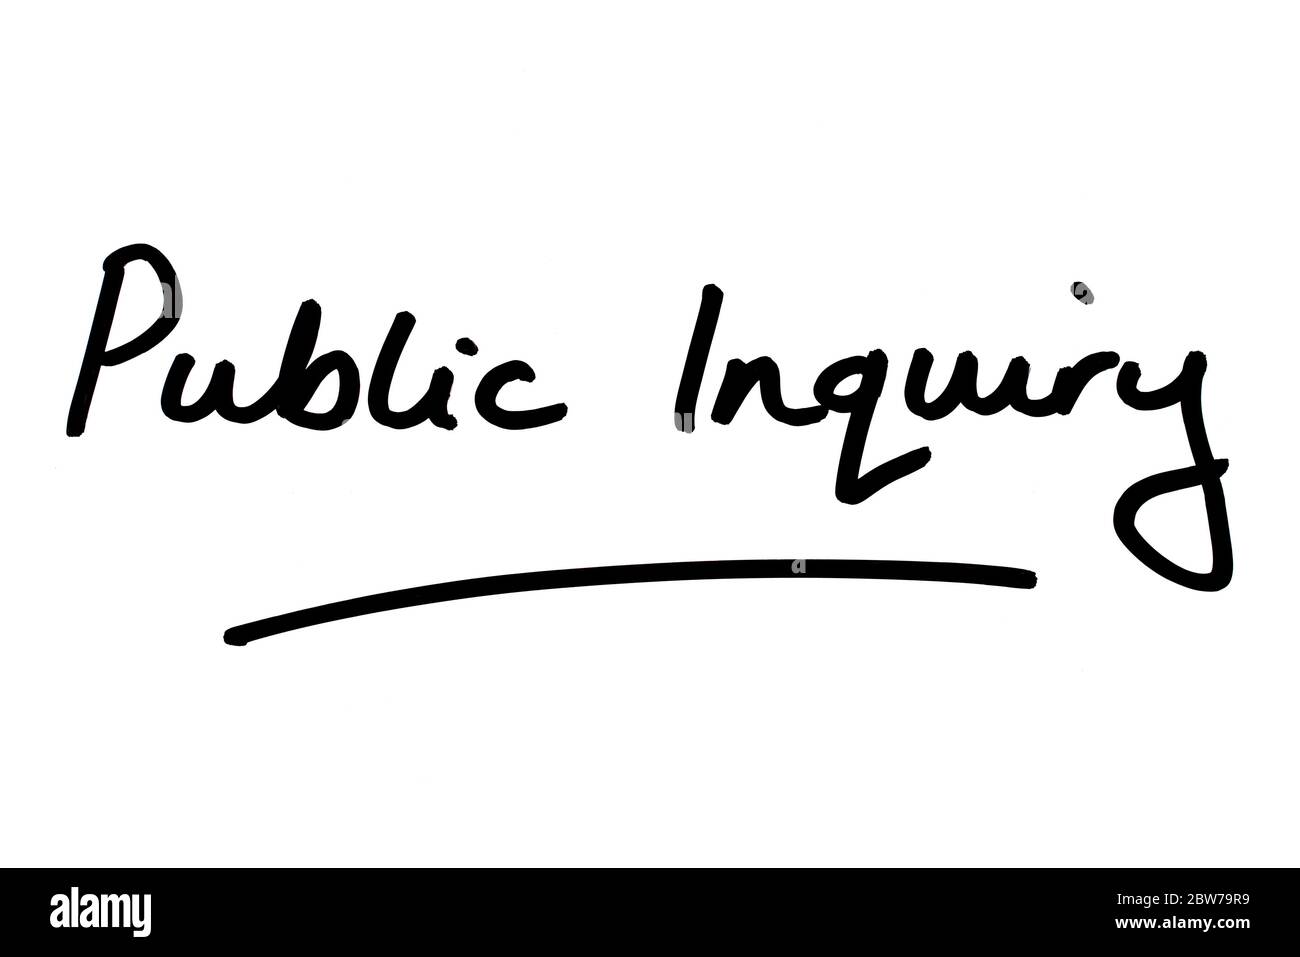 Public Inquiry handwritten on a white background. Stock Photo